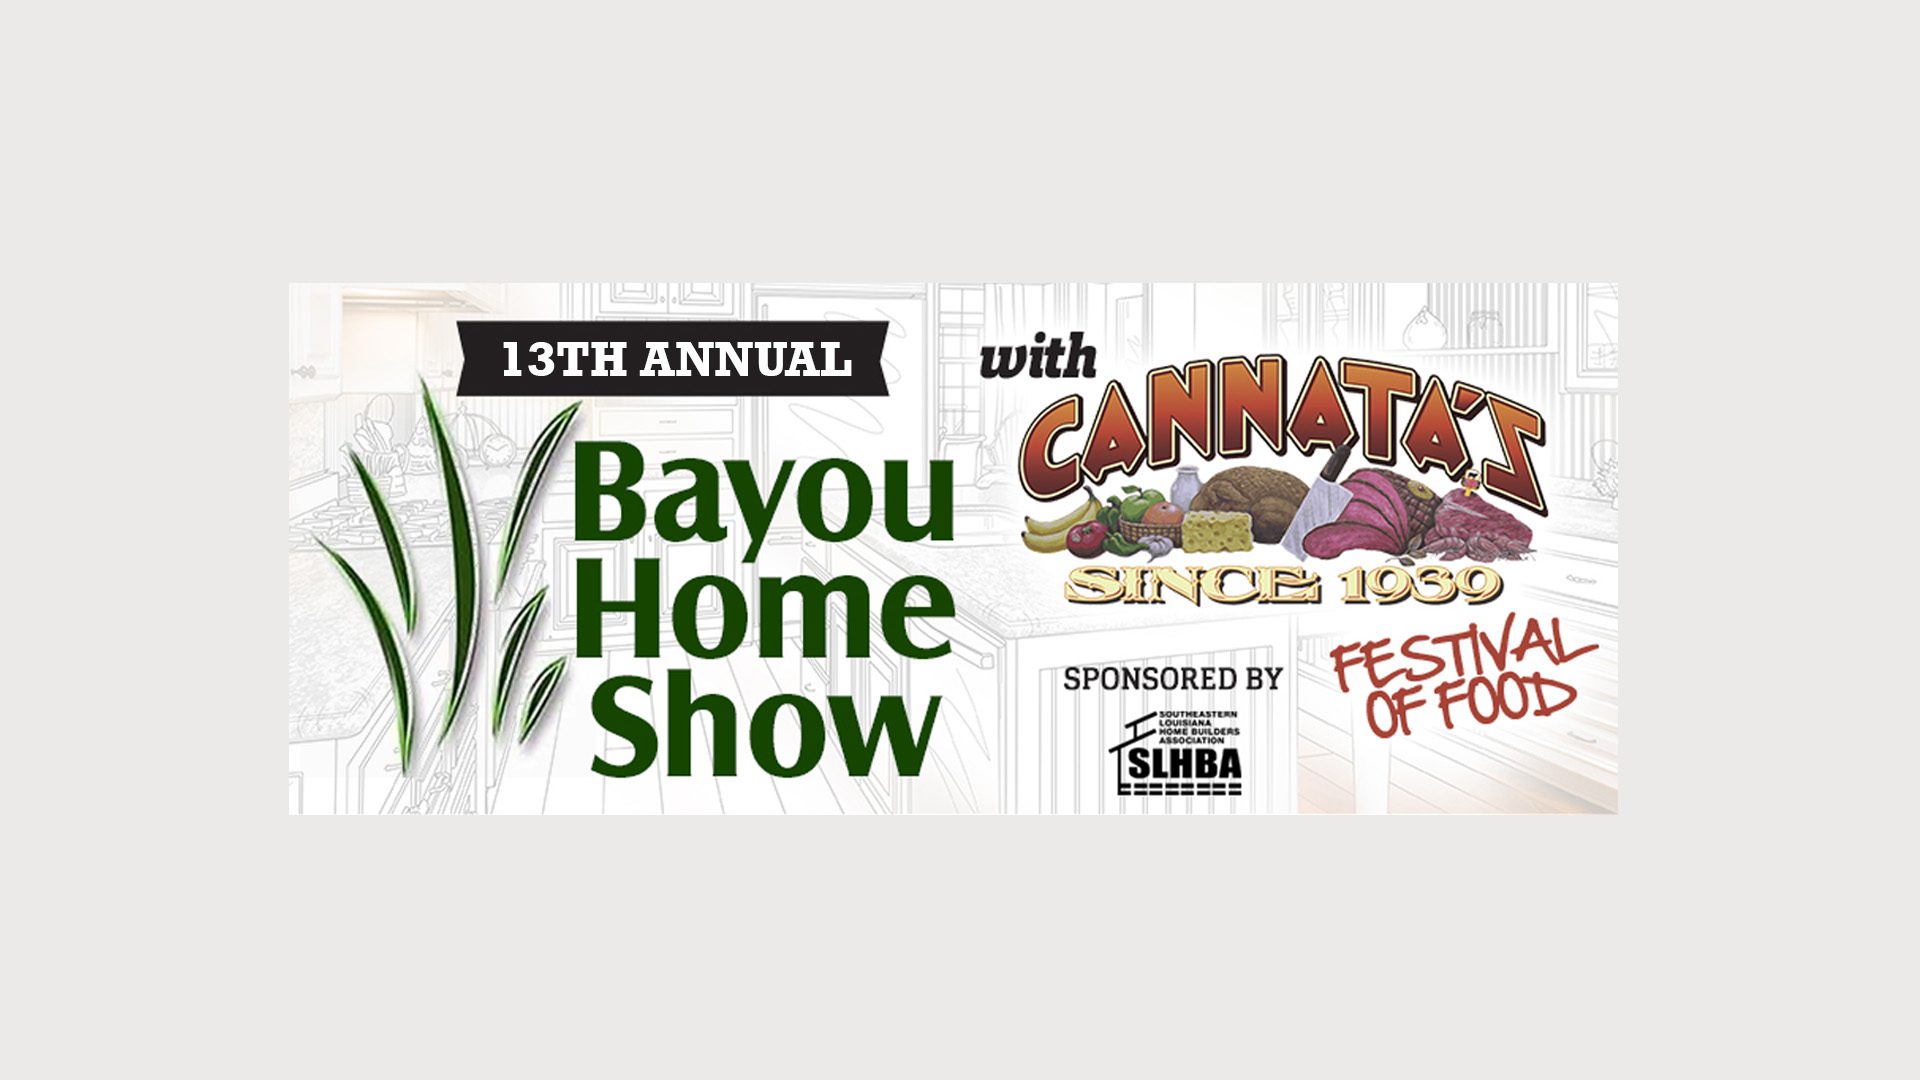 13th Annual Bayou Home Show and Cannata's Festival of Food